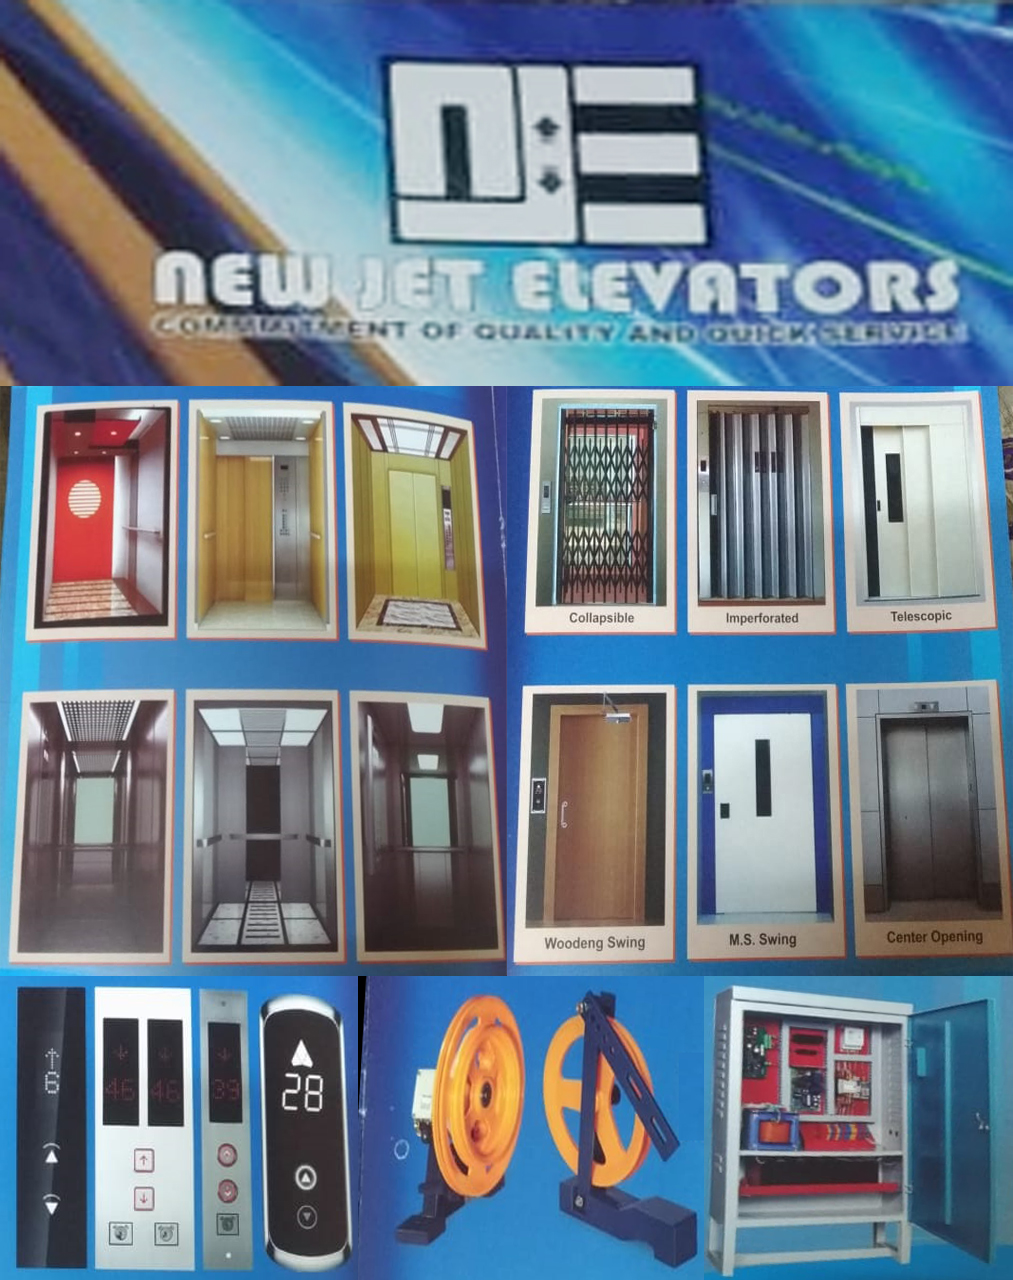 NEW JET ELEVATORS | SolapurMall.com